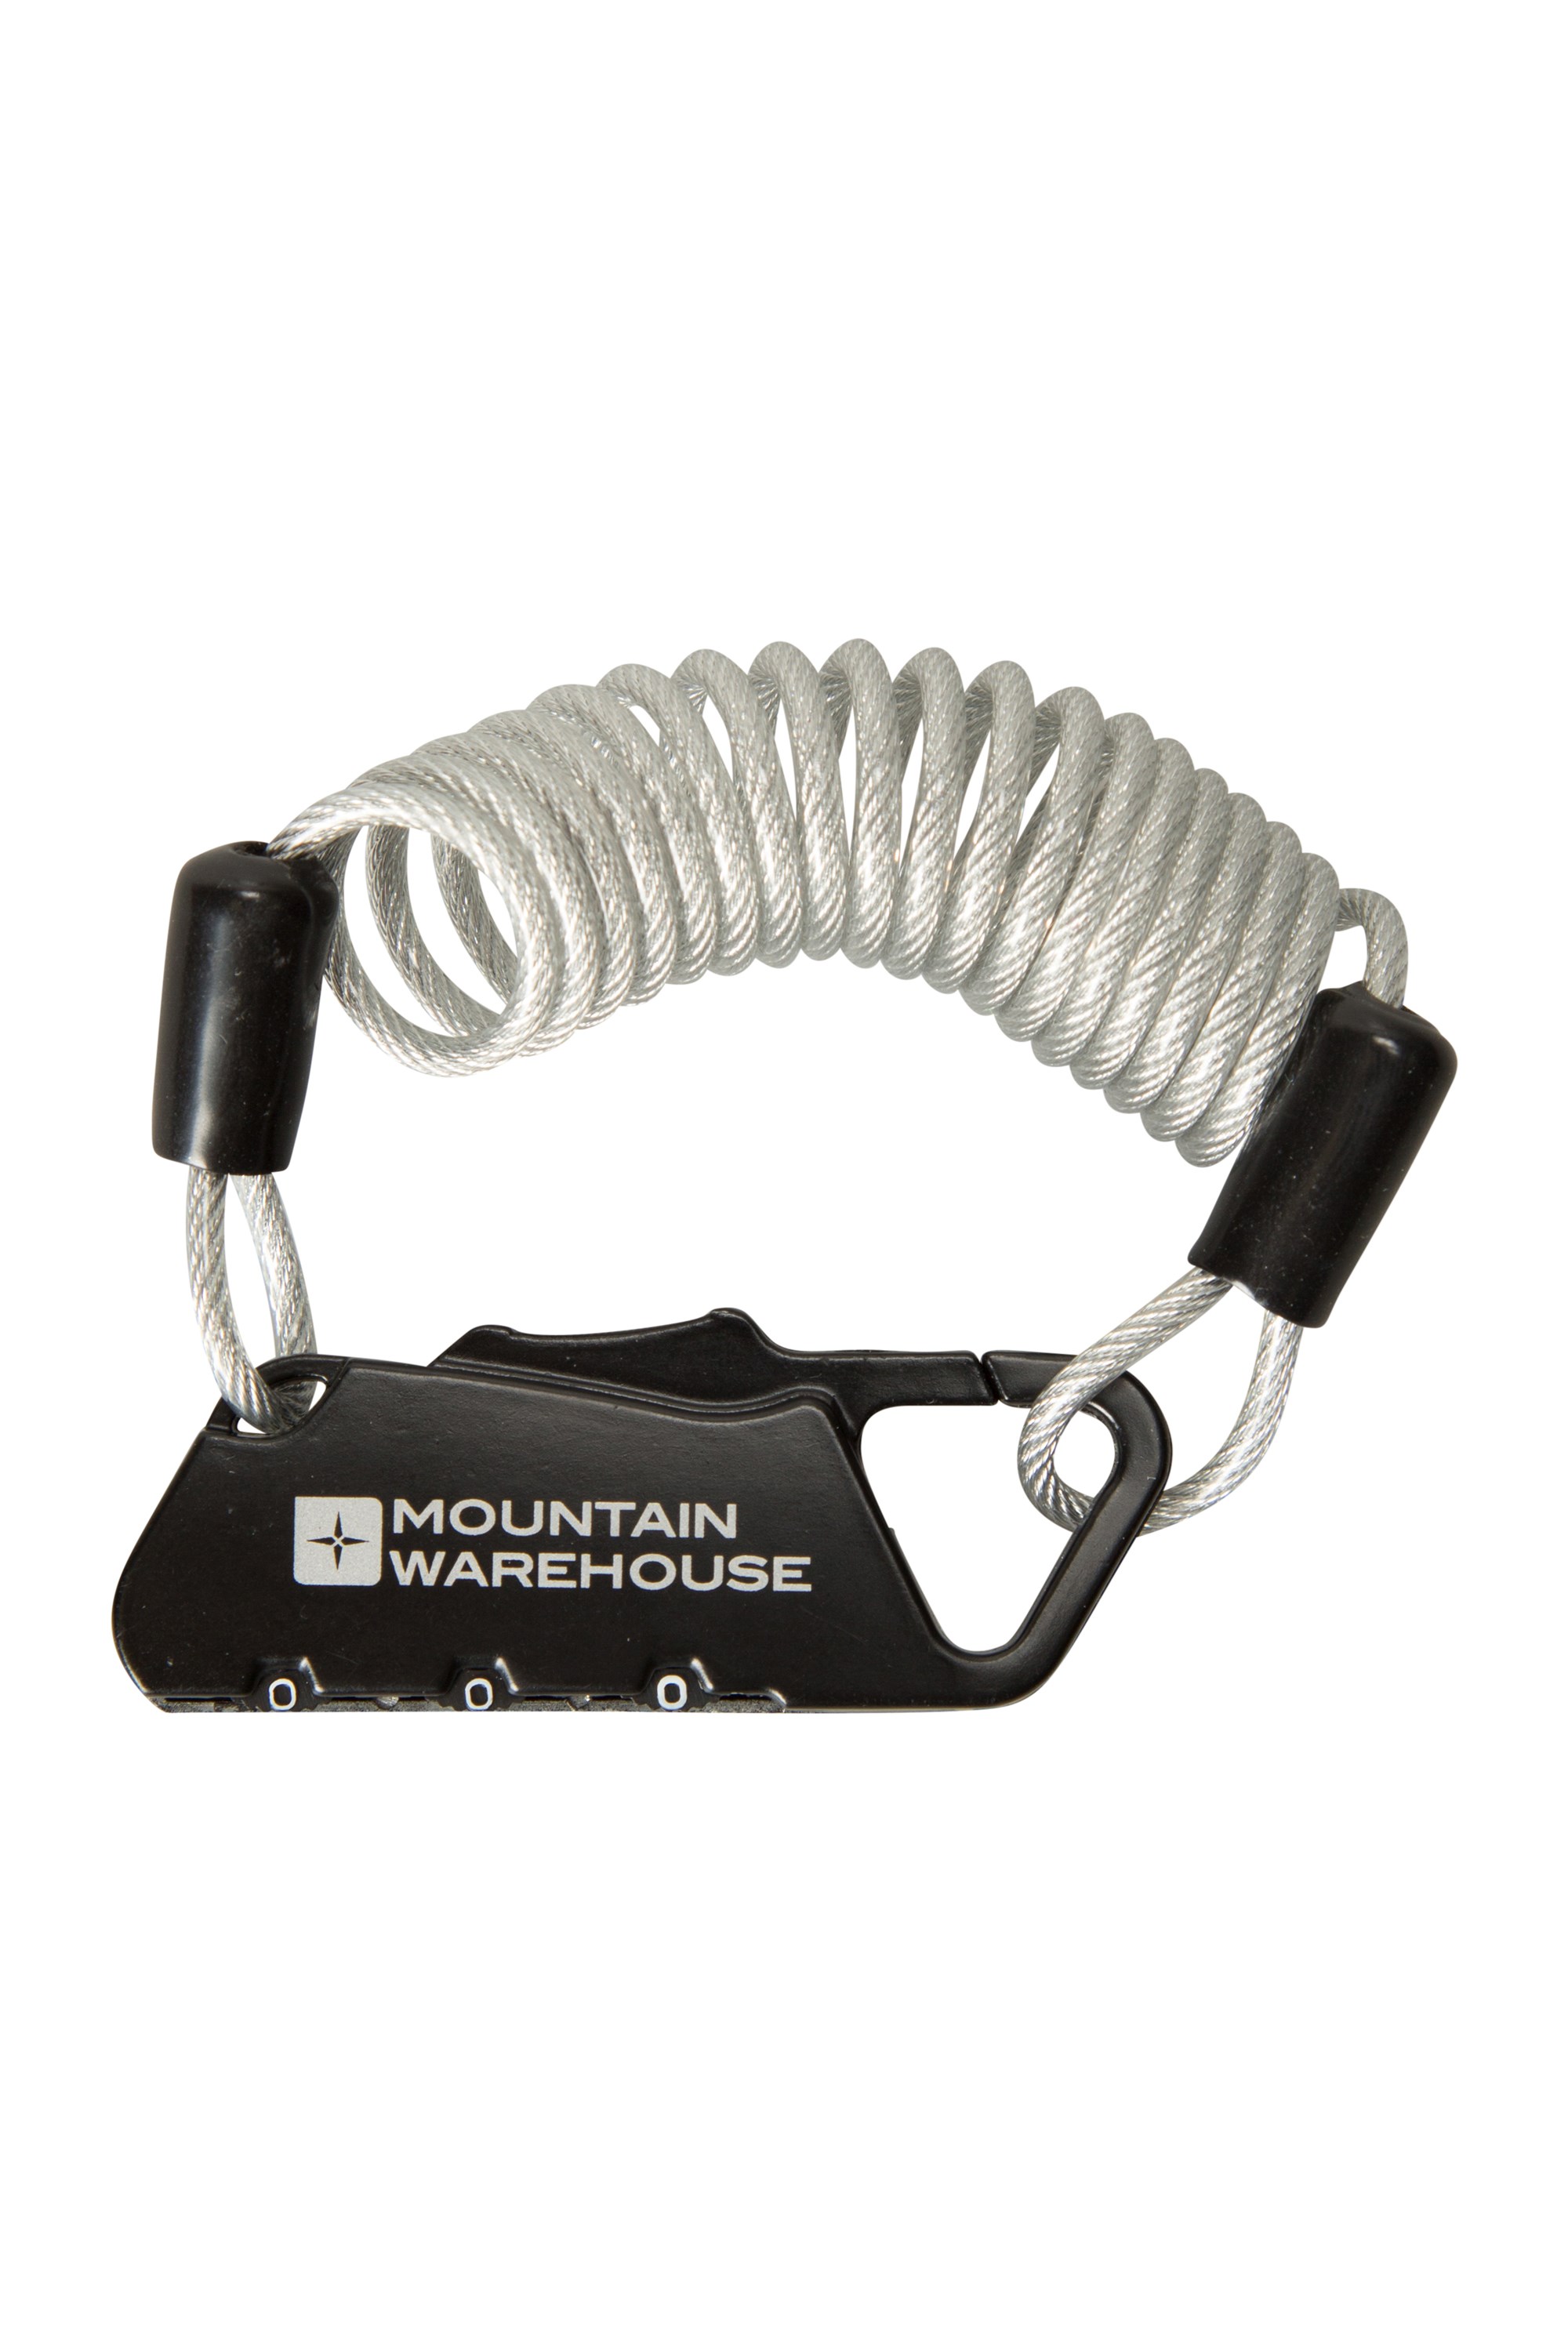 mountain warehouse bike lock